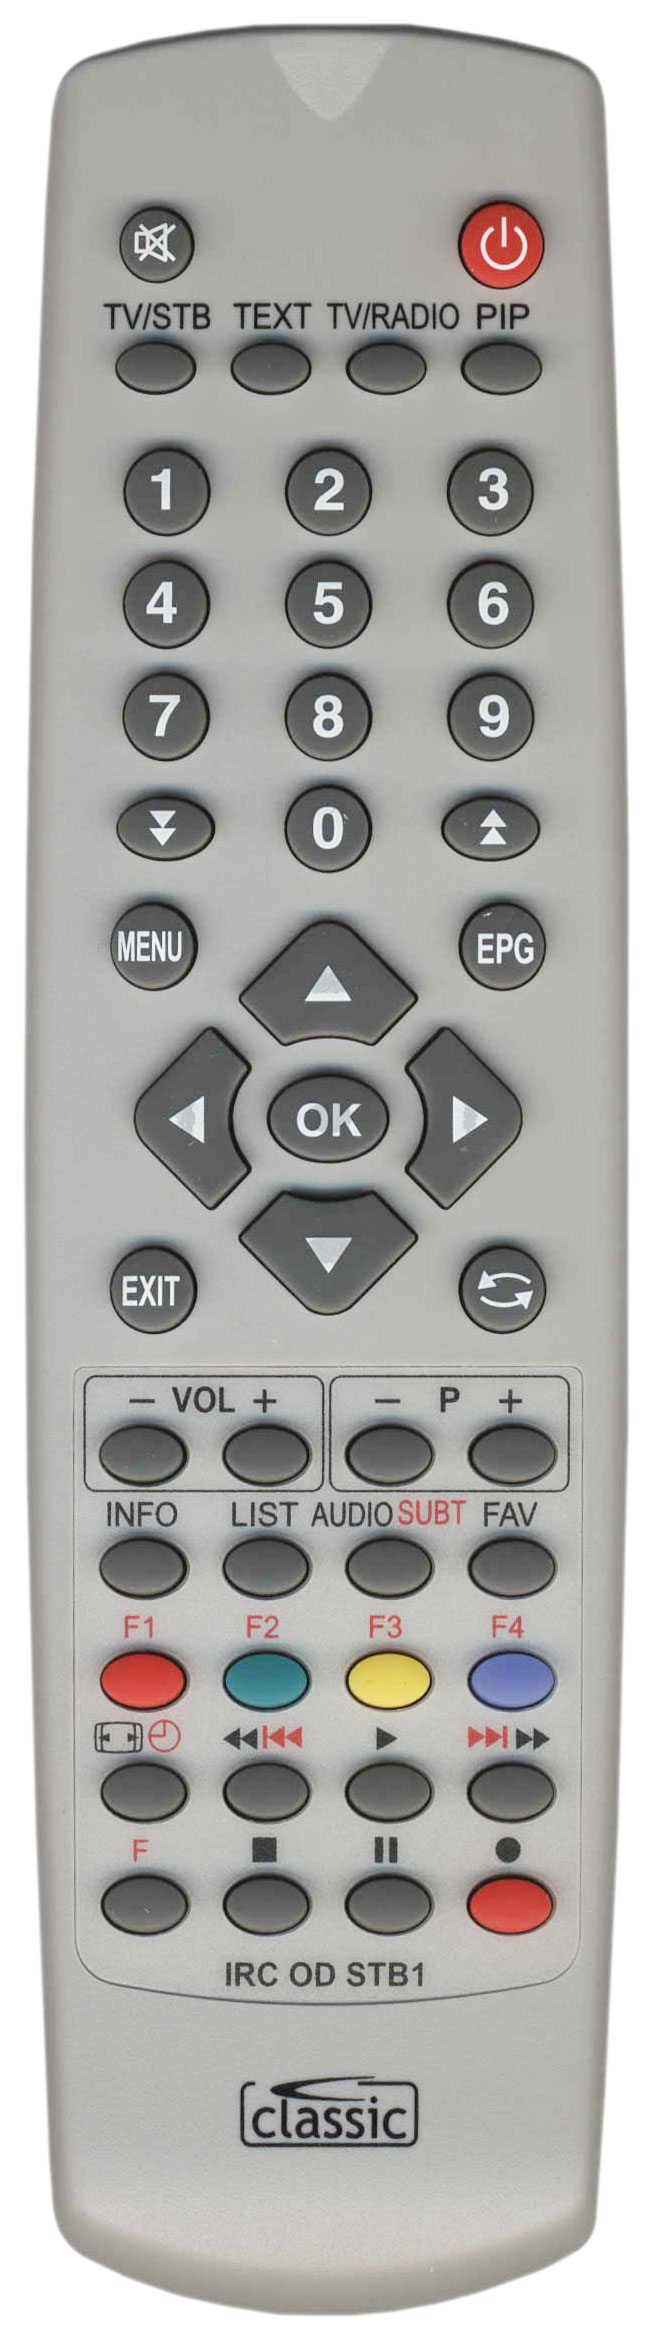 TECHNOMATE TM5000SUPERSERIES Remote Control